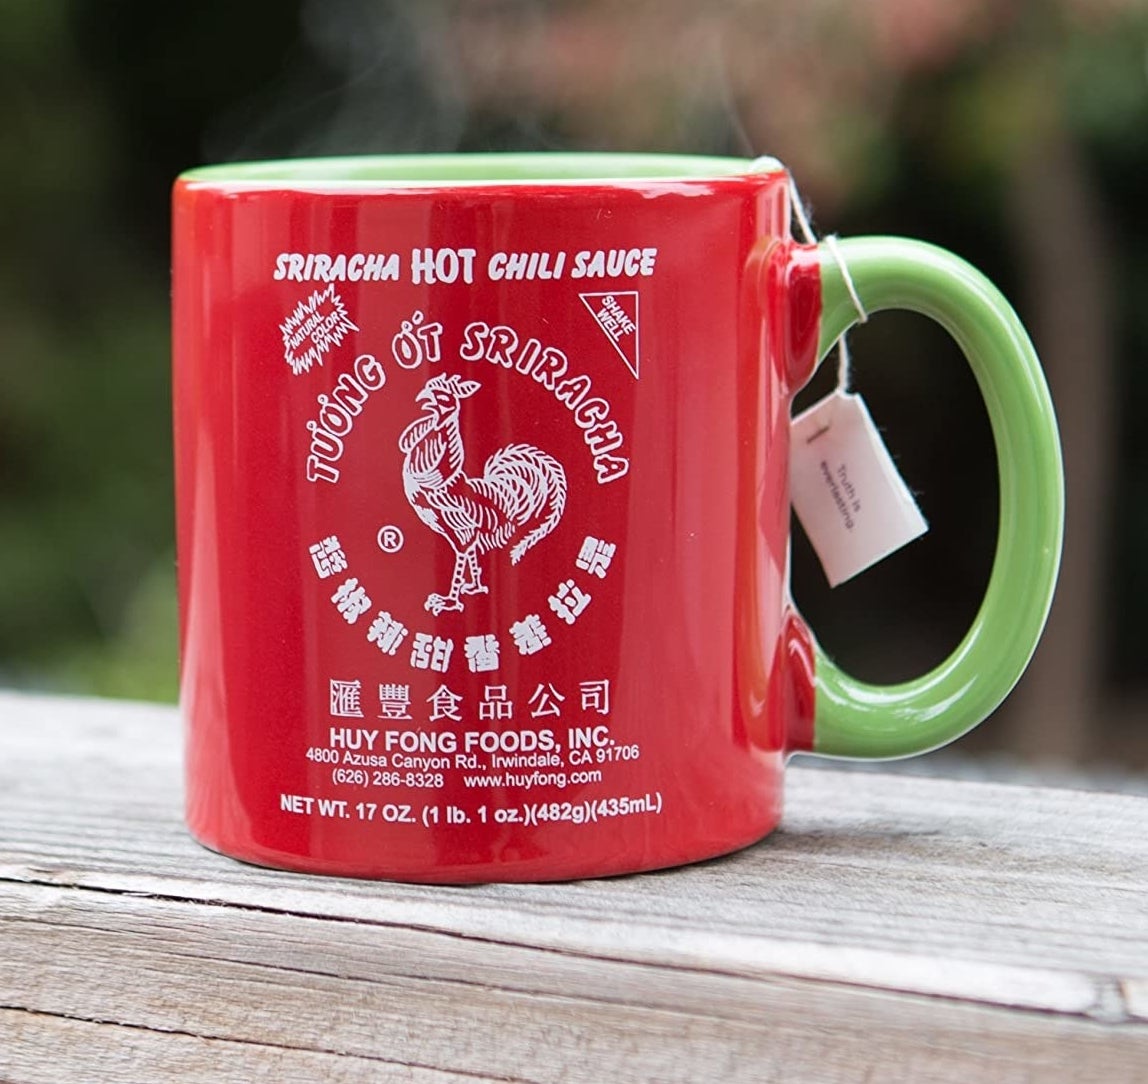 The red and green Sriracha mug holding a tea bag outdoors